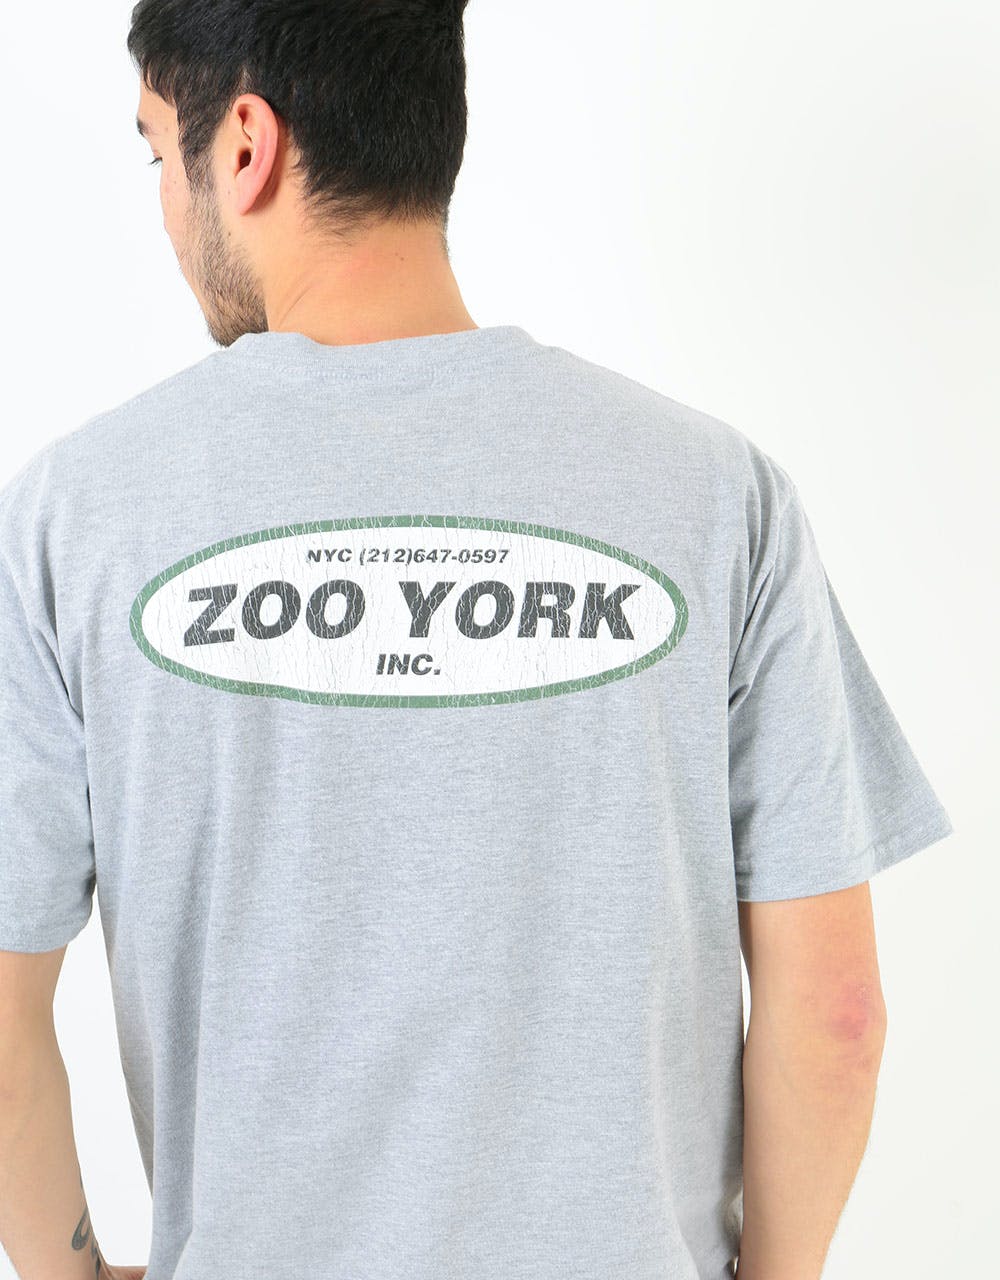 Zoo York Workshop T-Shirt - Grey Heather